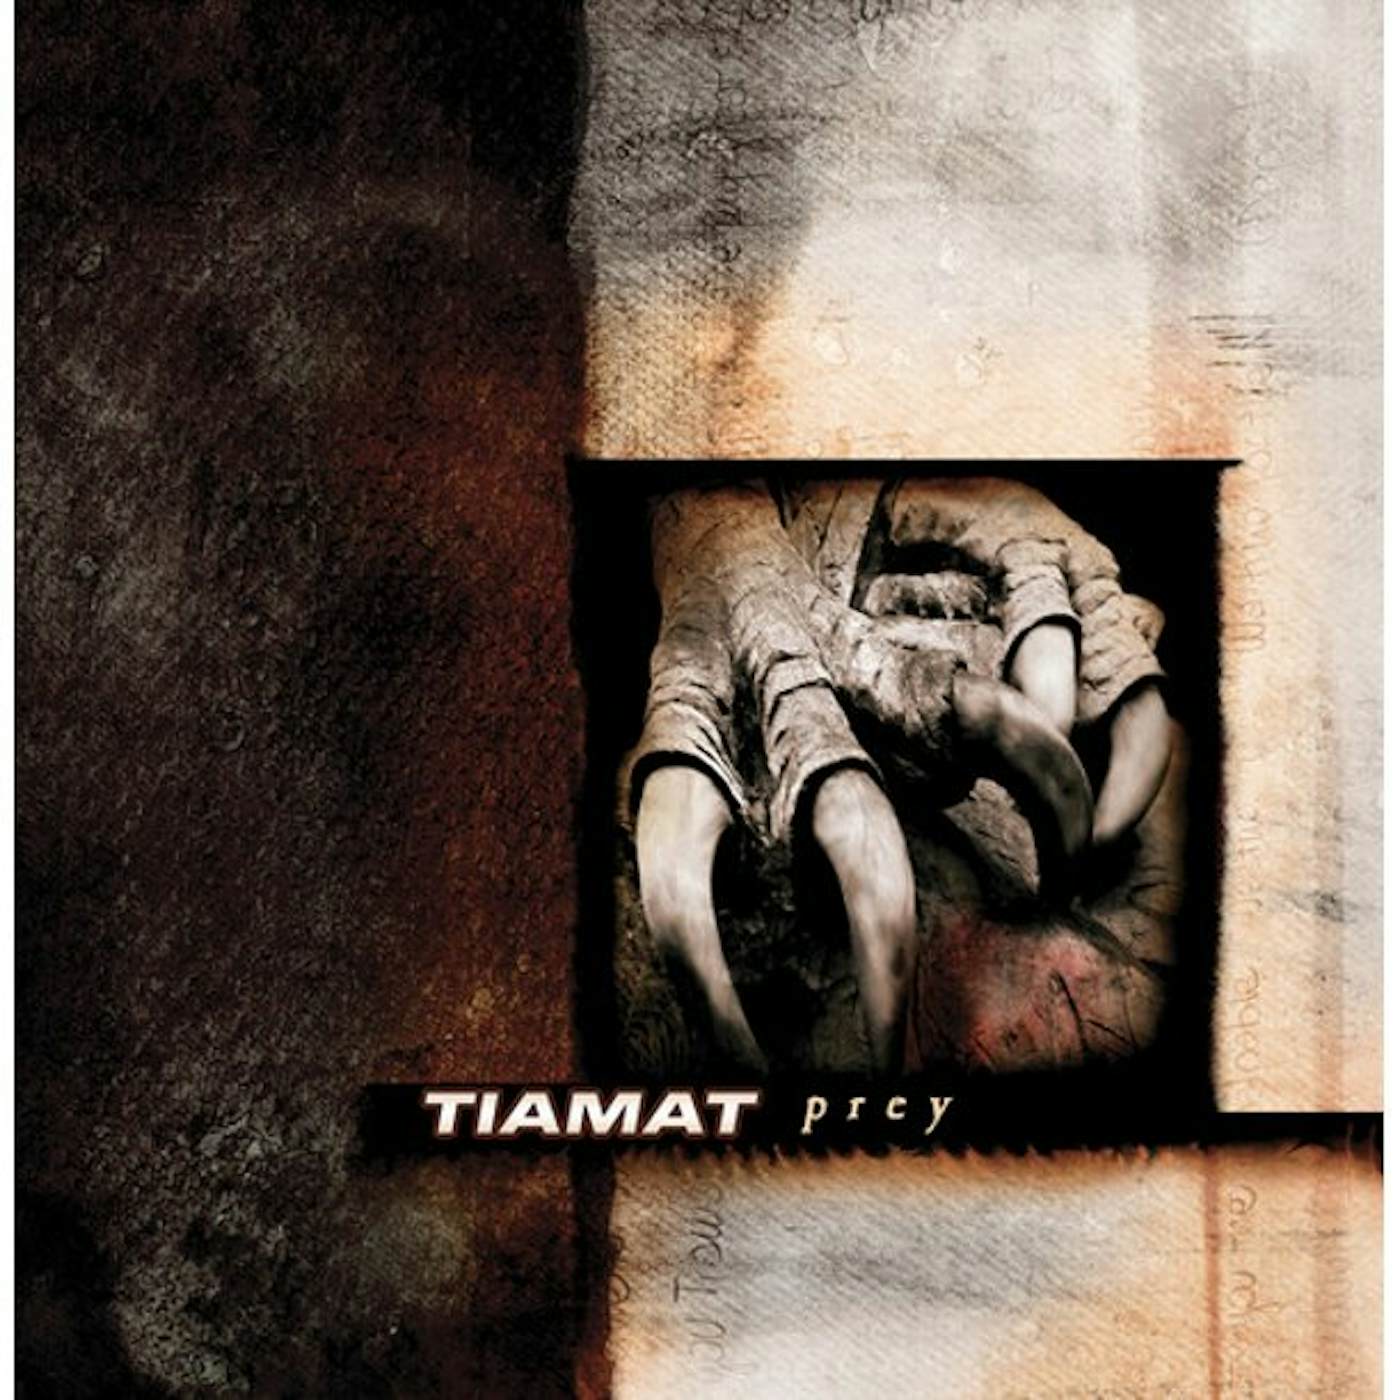 Tiamat Prey (Metal Box) vinyl record